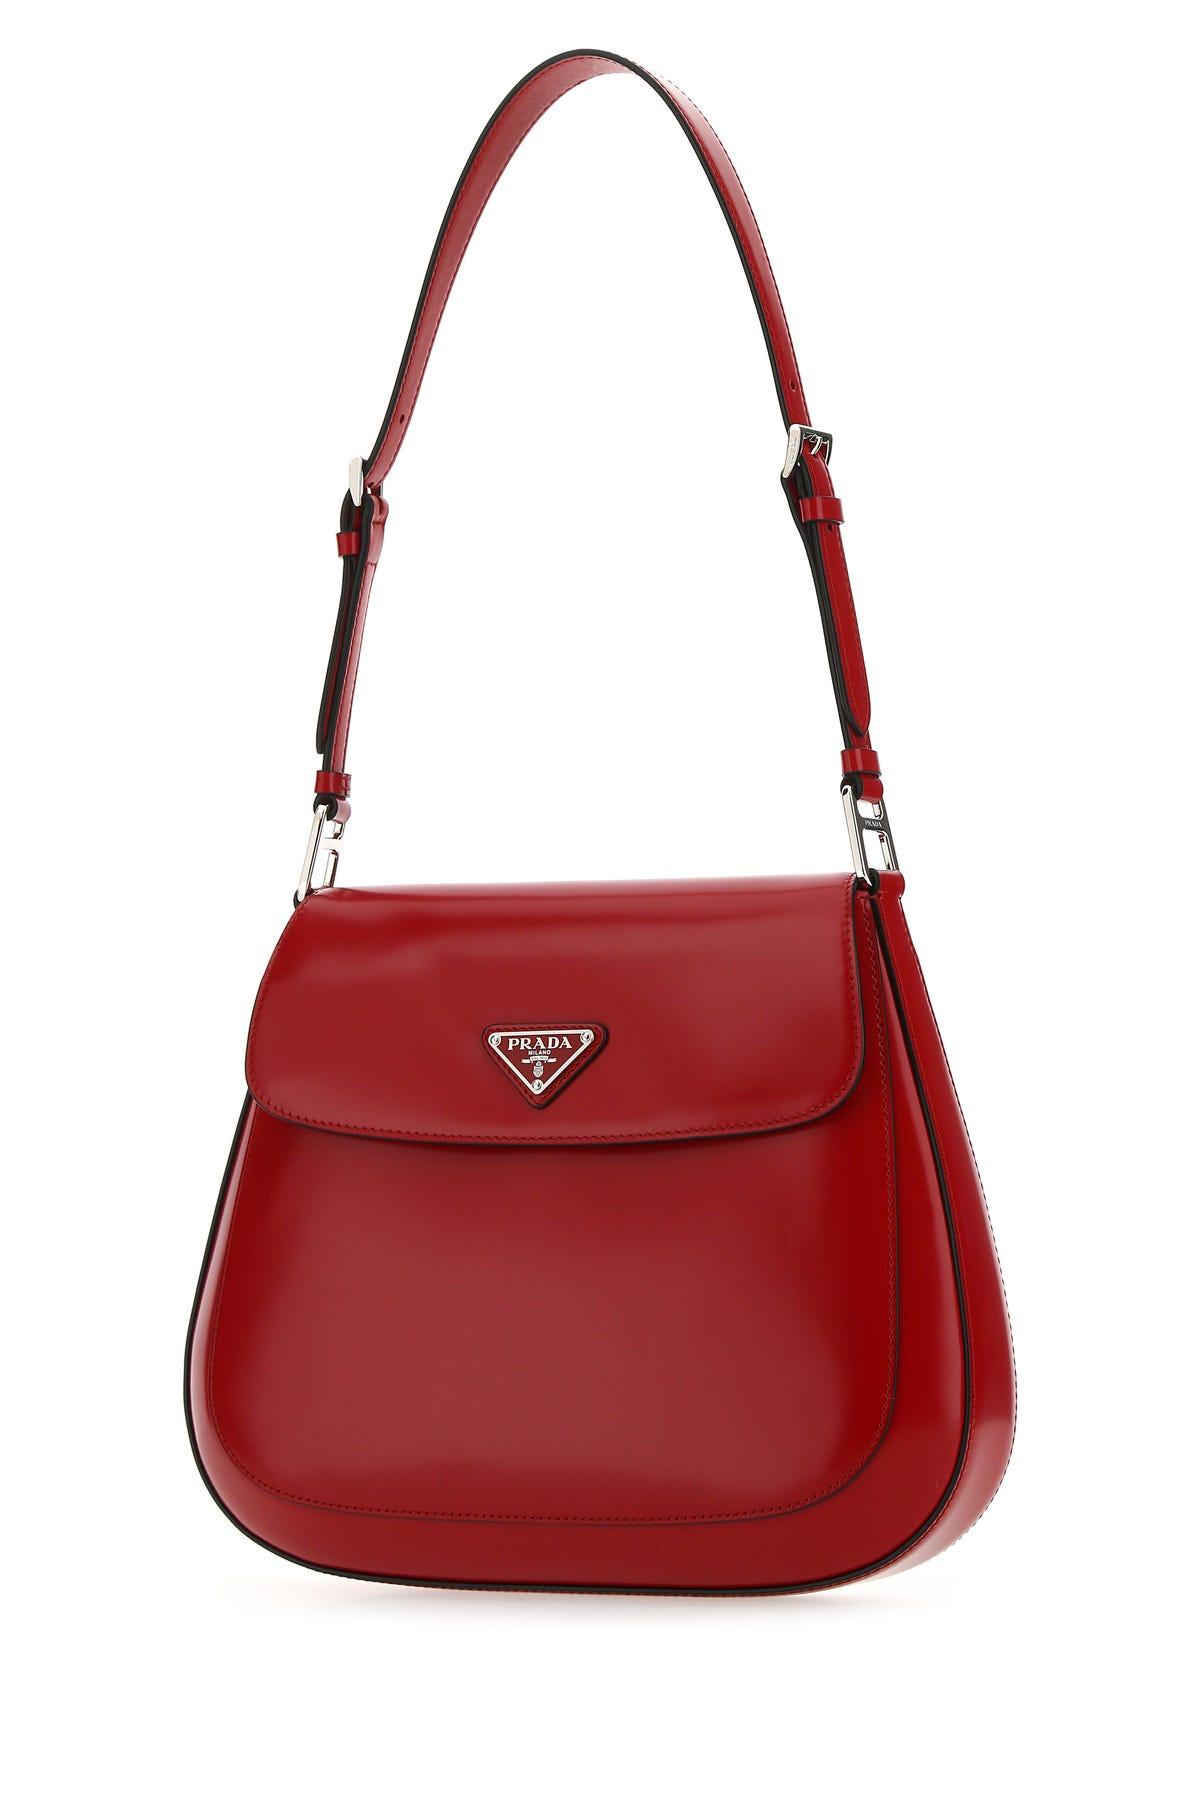 Designer - Pre-Loved Prada Leather Pocket Satchel - Red | M.catch.com.au